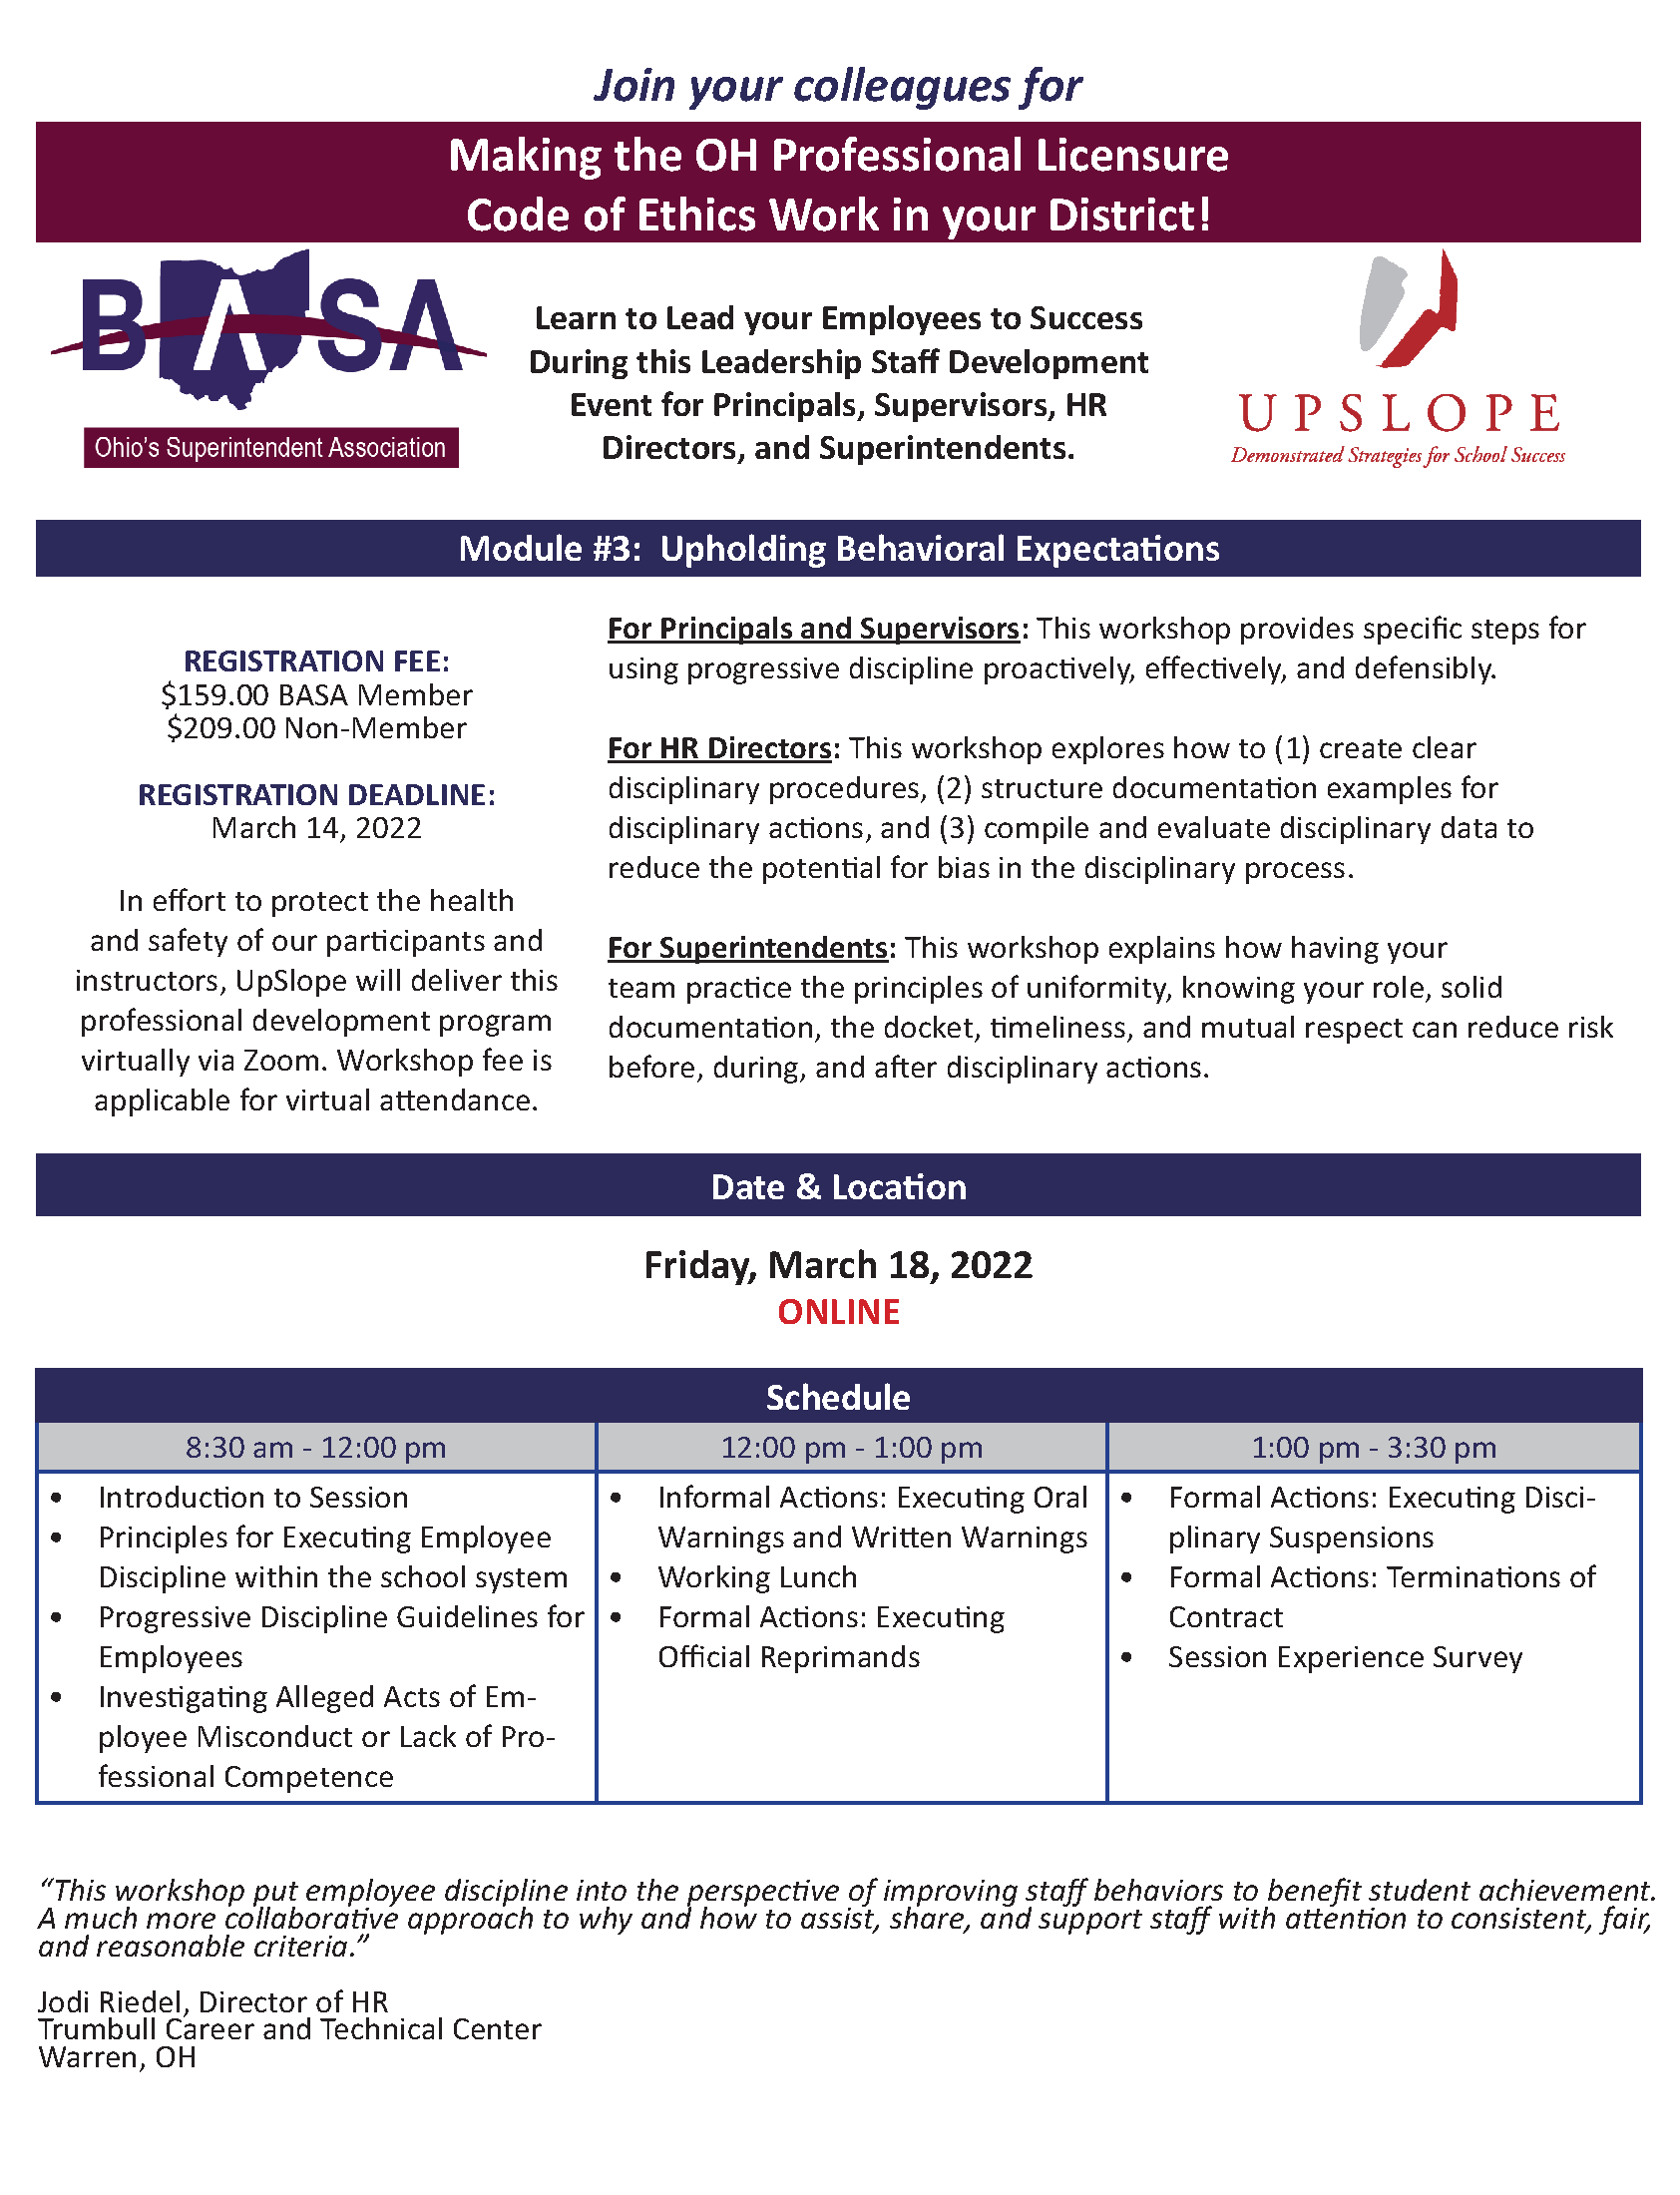 Best Practices for Modifying Employee Behavior@BASA